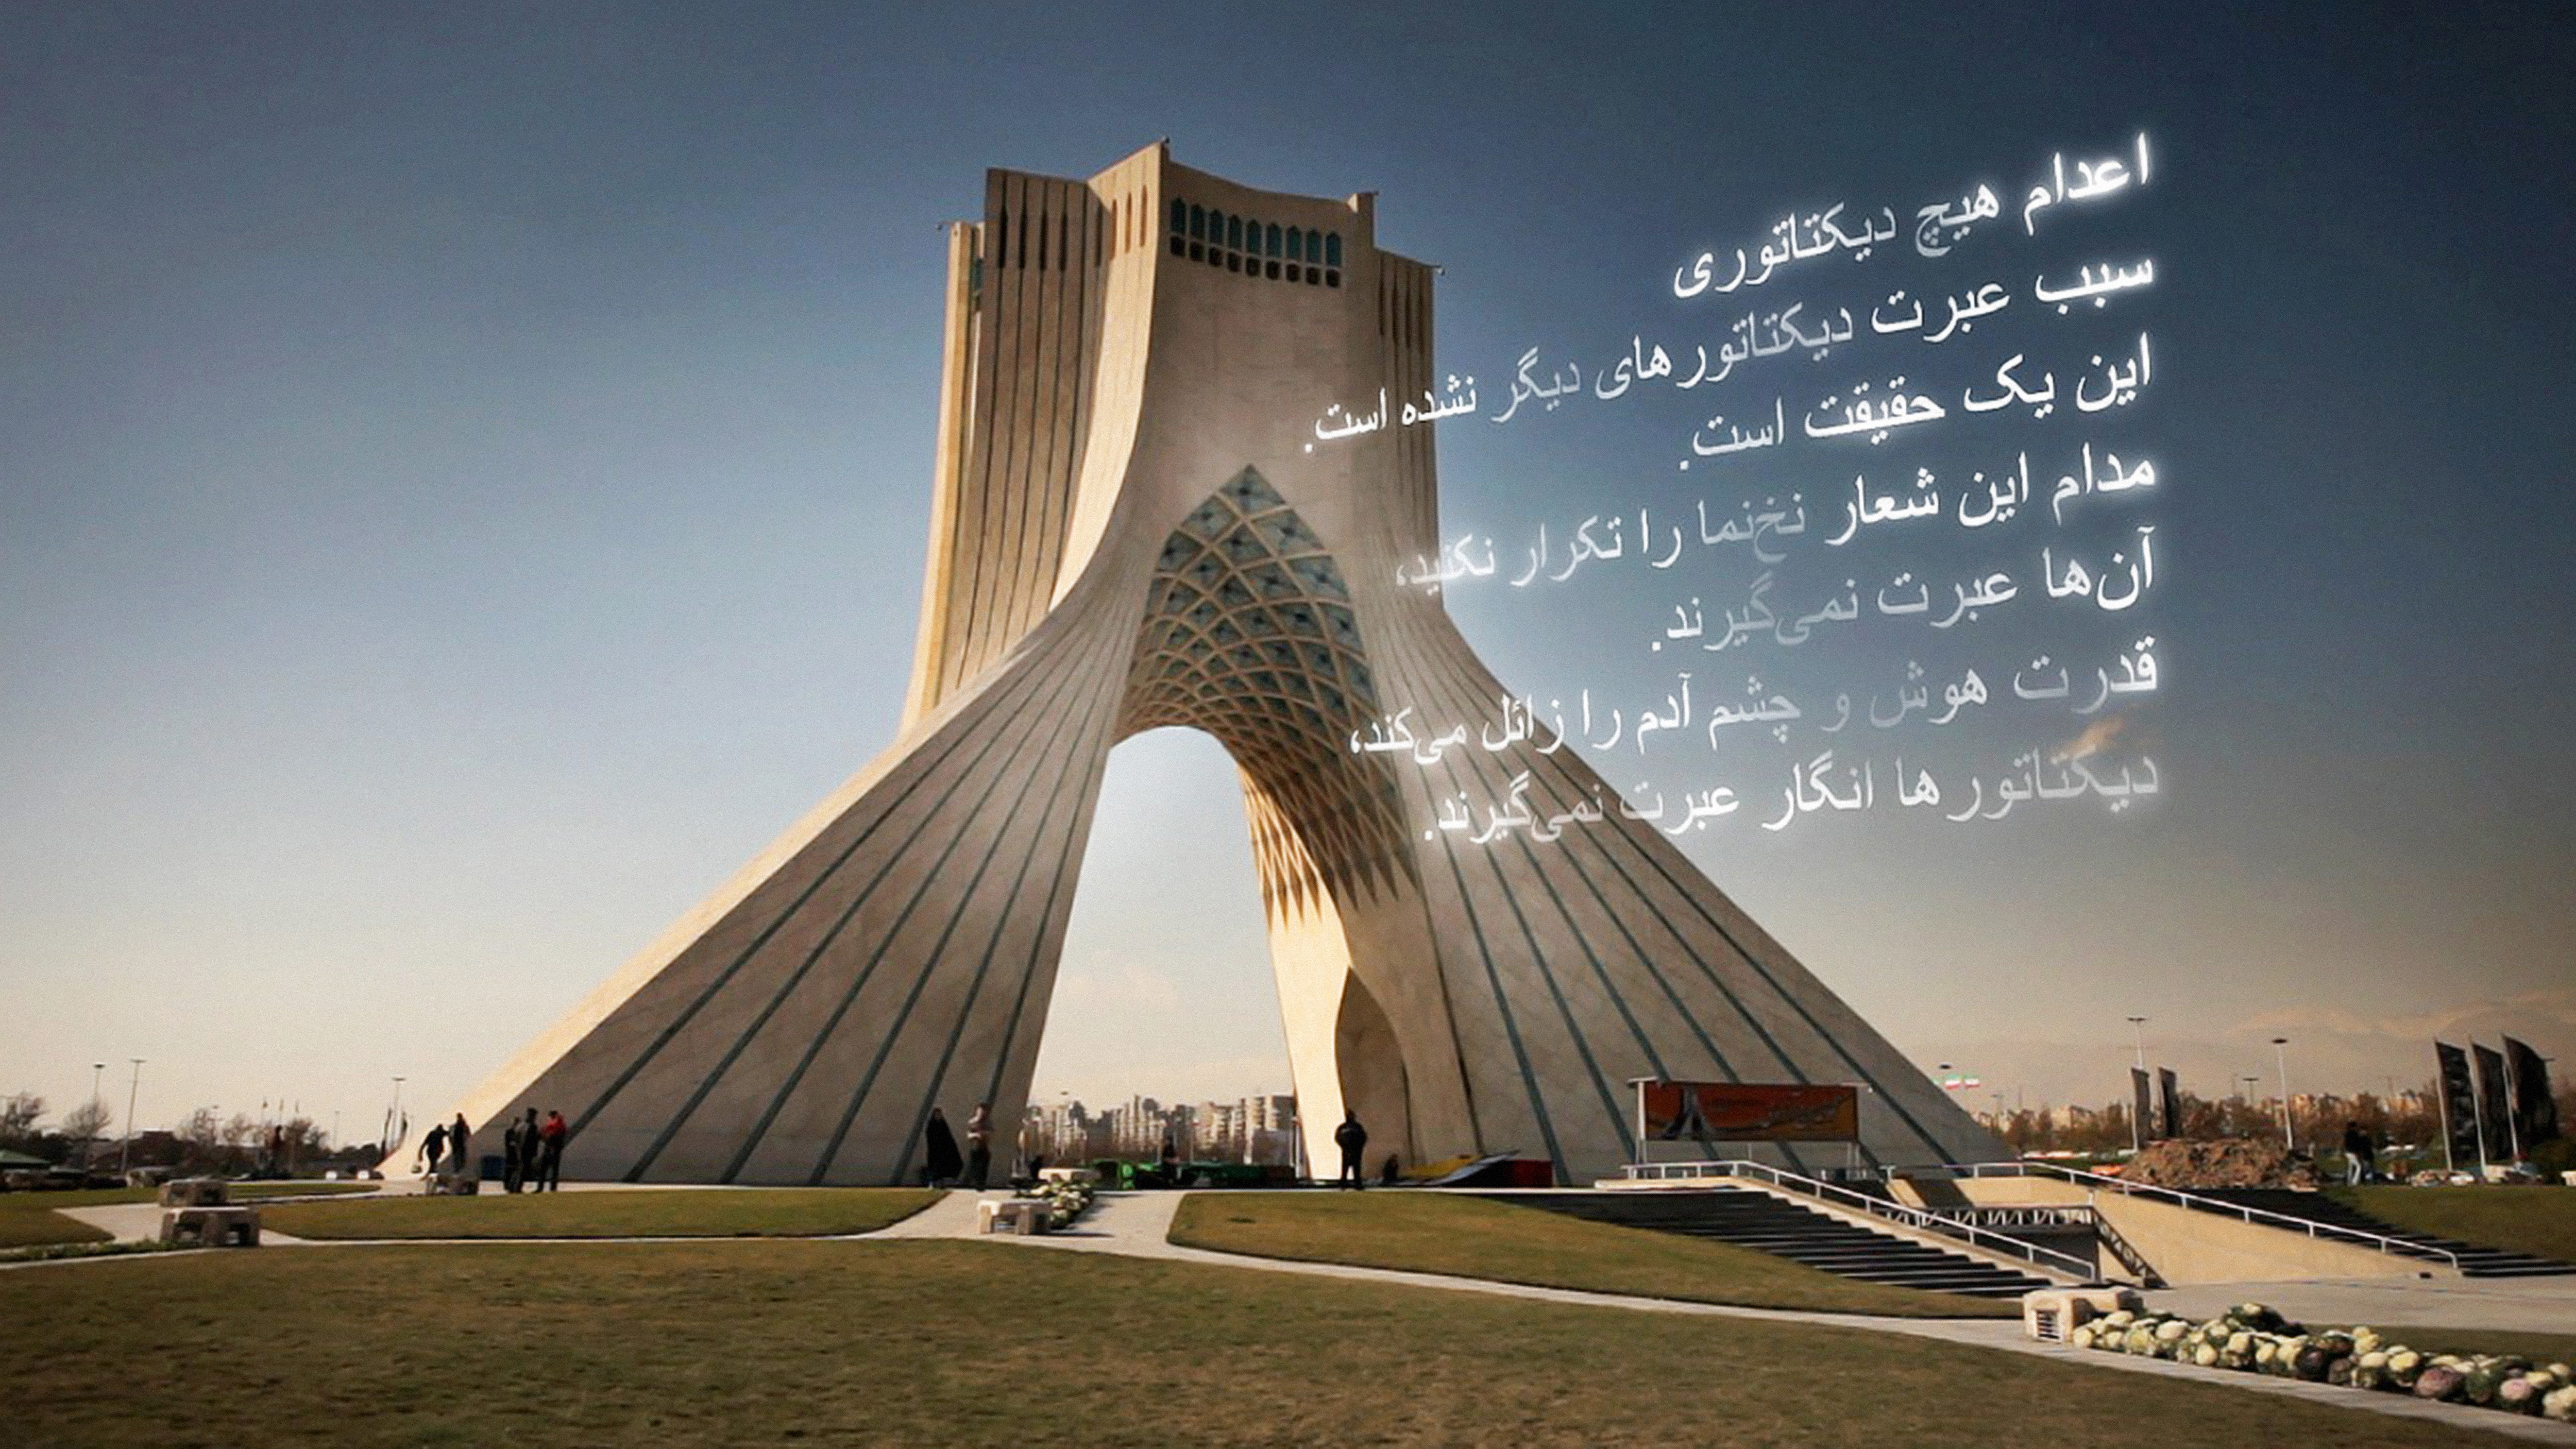 Blog text of Farnaz Seifi against dictatorship, Tehran, Iran